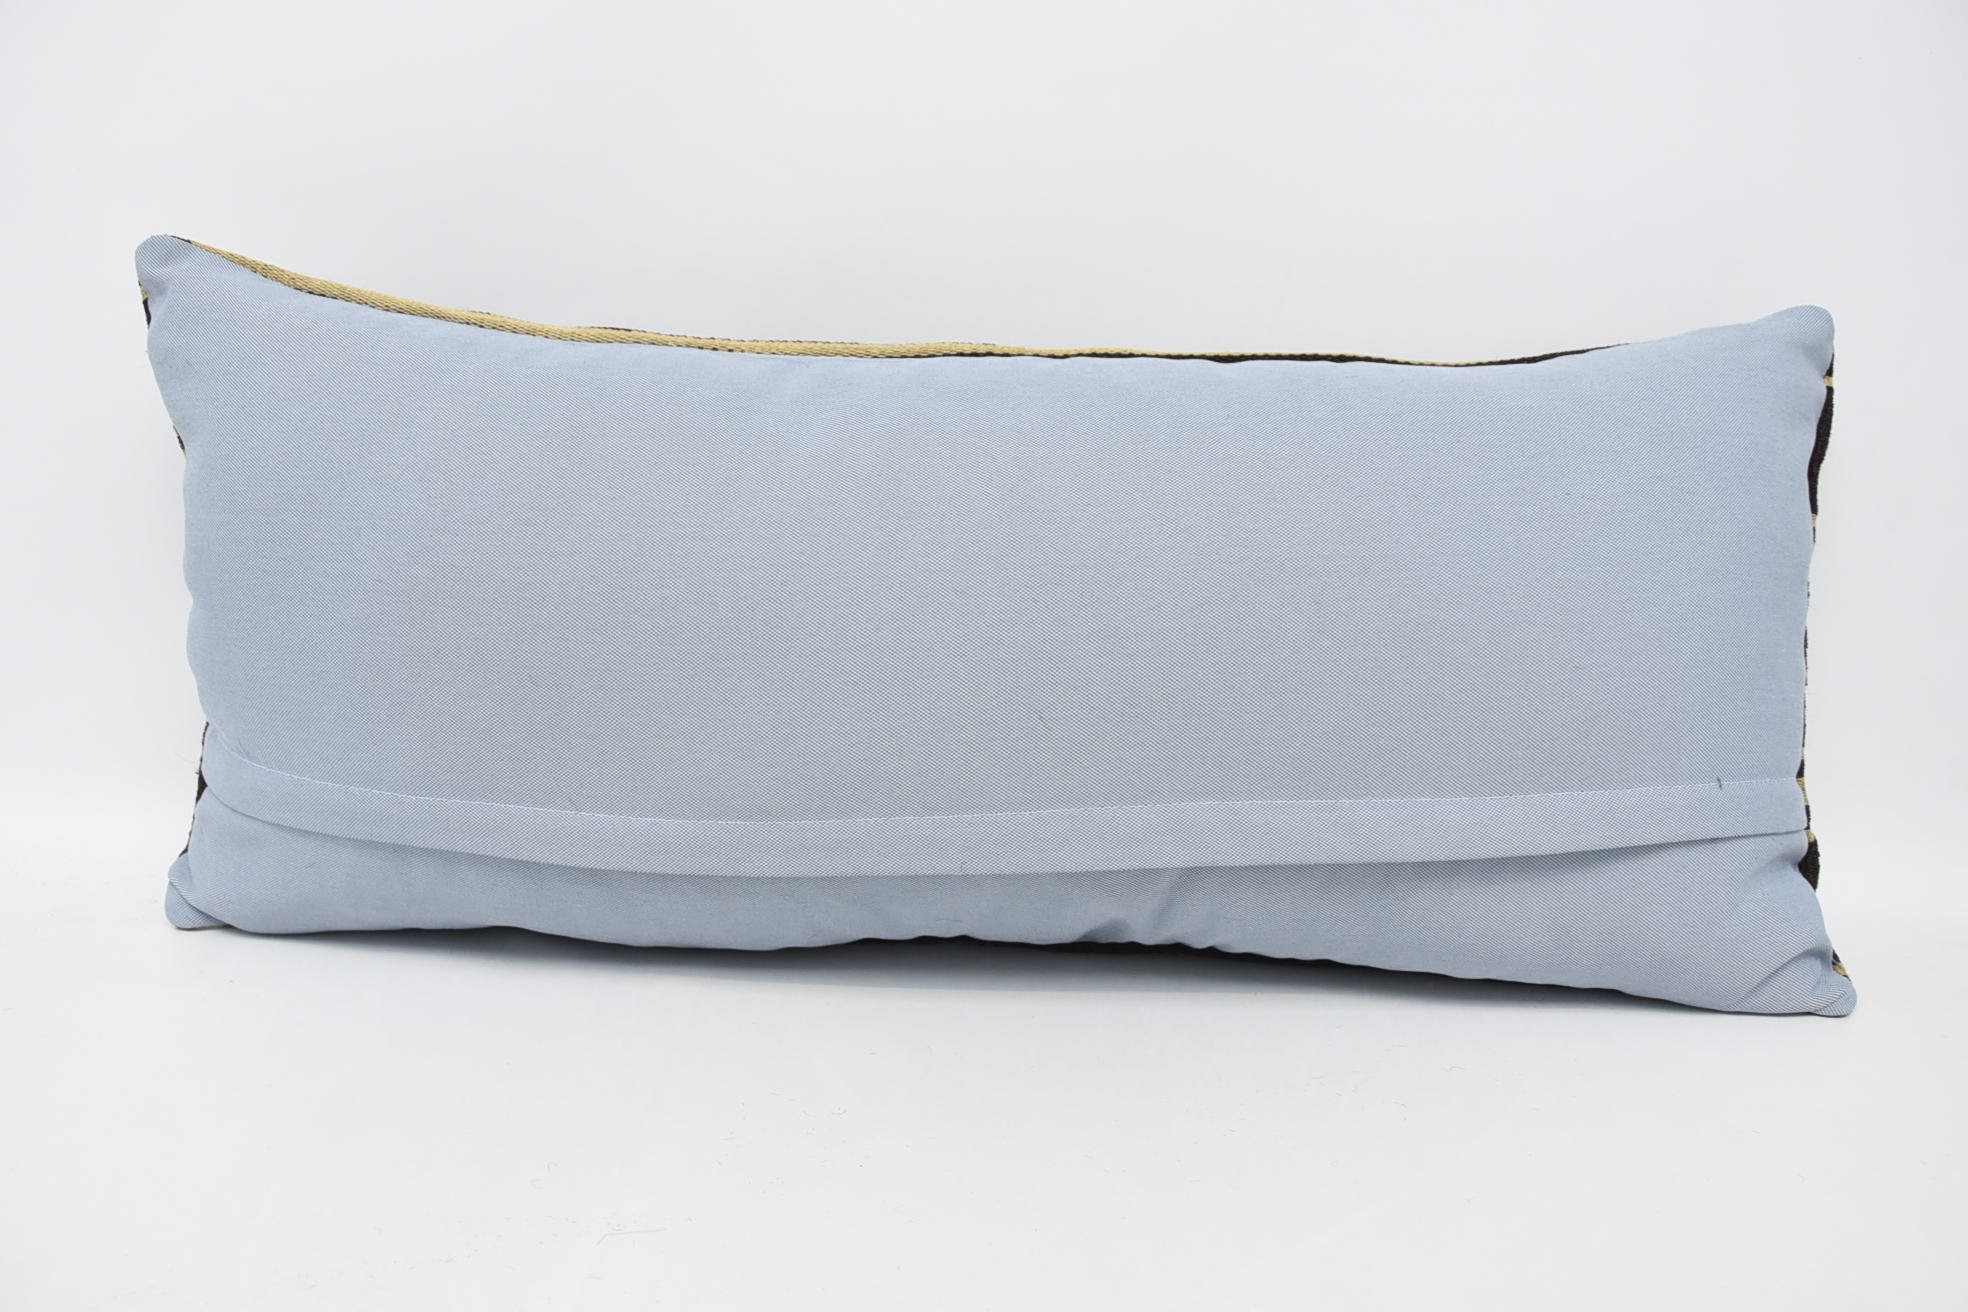 16"x36" Brown Pillow Cover, Boho Pillow, Bolster Throw Pillow Case, Outdoor Cushion, Pillow for Sofa, Handmade Kilim Cushion